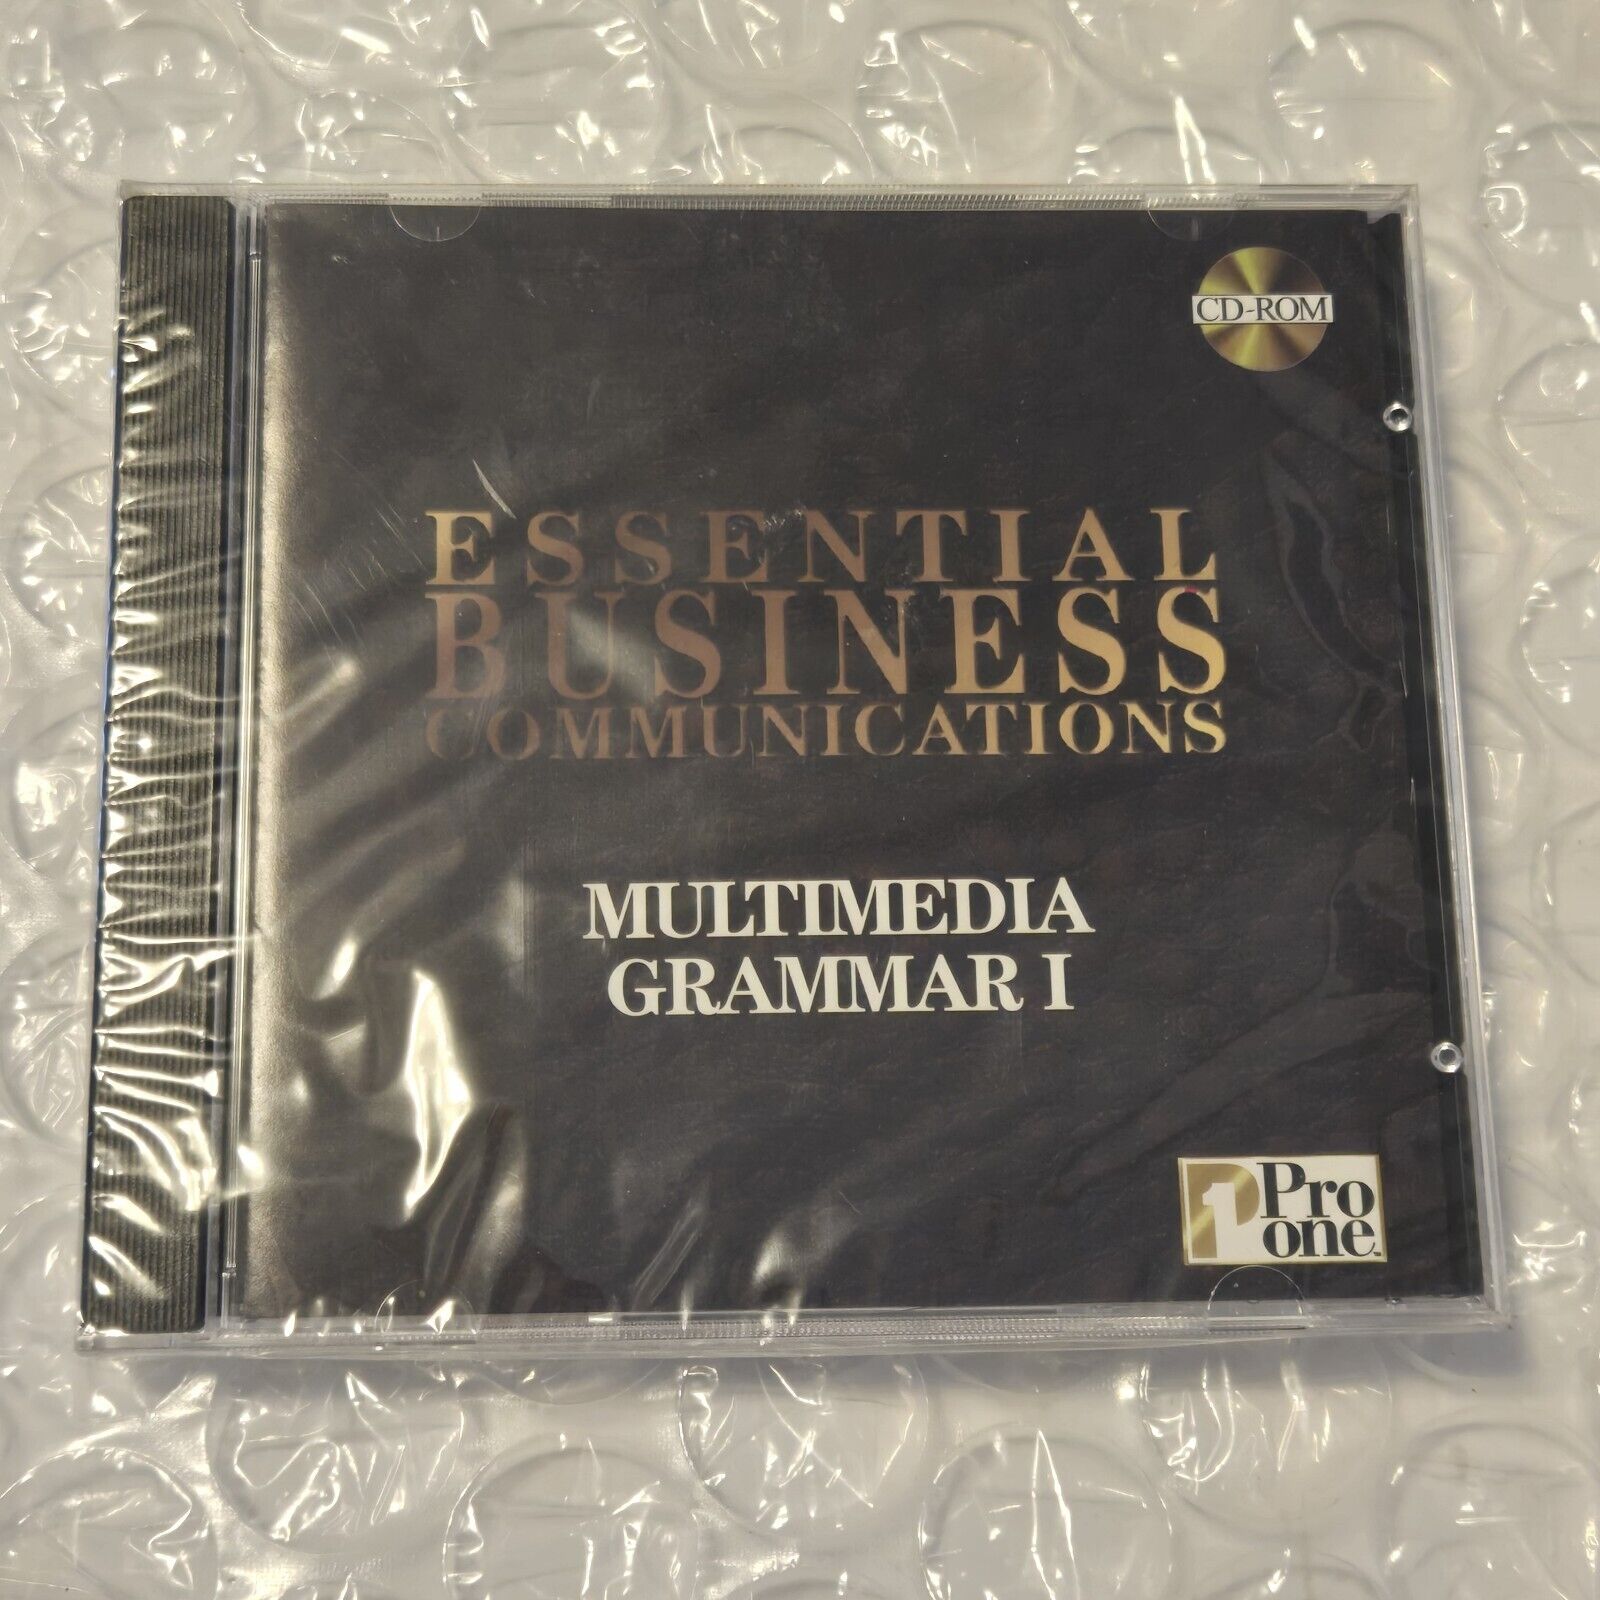 Essential Business Communications Multimedia Grammar 1 Windows 95 IBM PC CD ROM